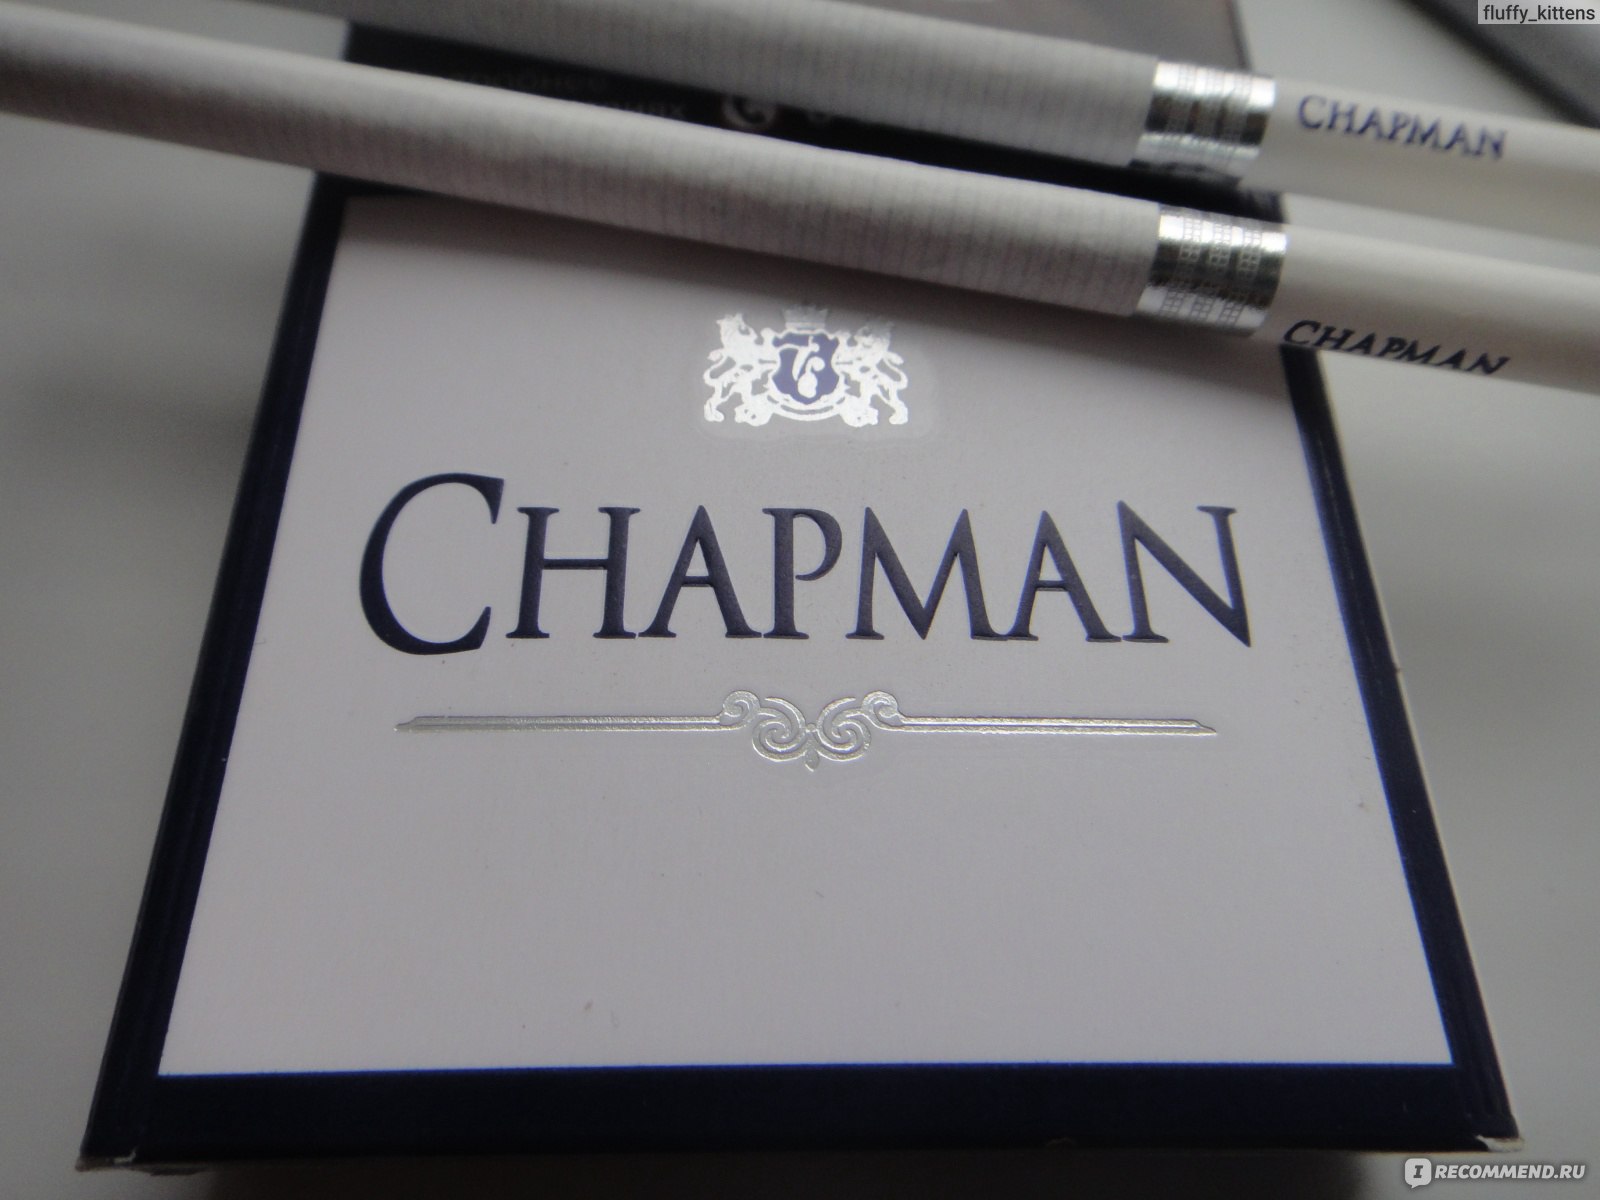 Виды сигарет чапман. Chapman сигареты. Сигареты Chapman Blue. Chapman сигареты производитель. Chapman Compact сигареты.